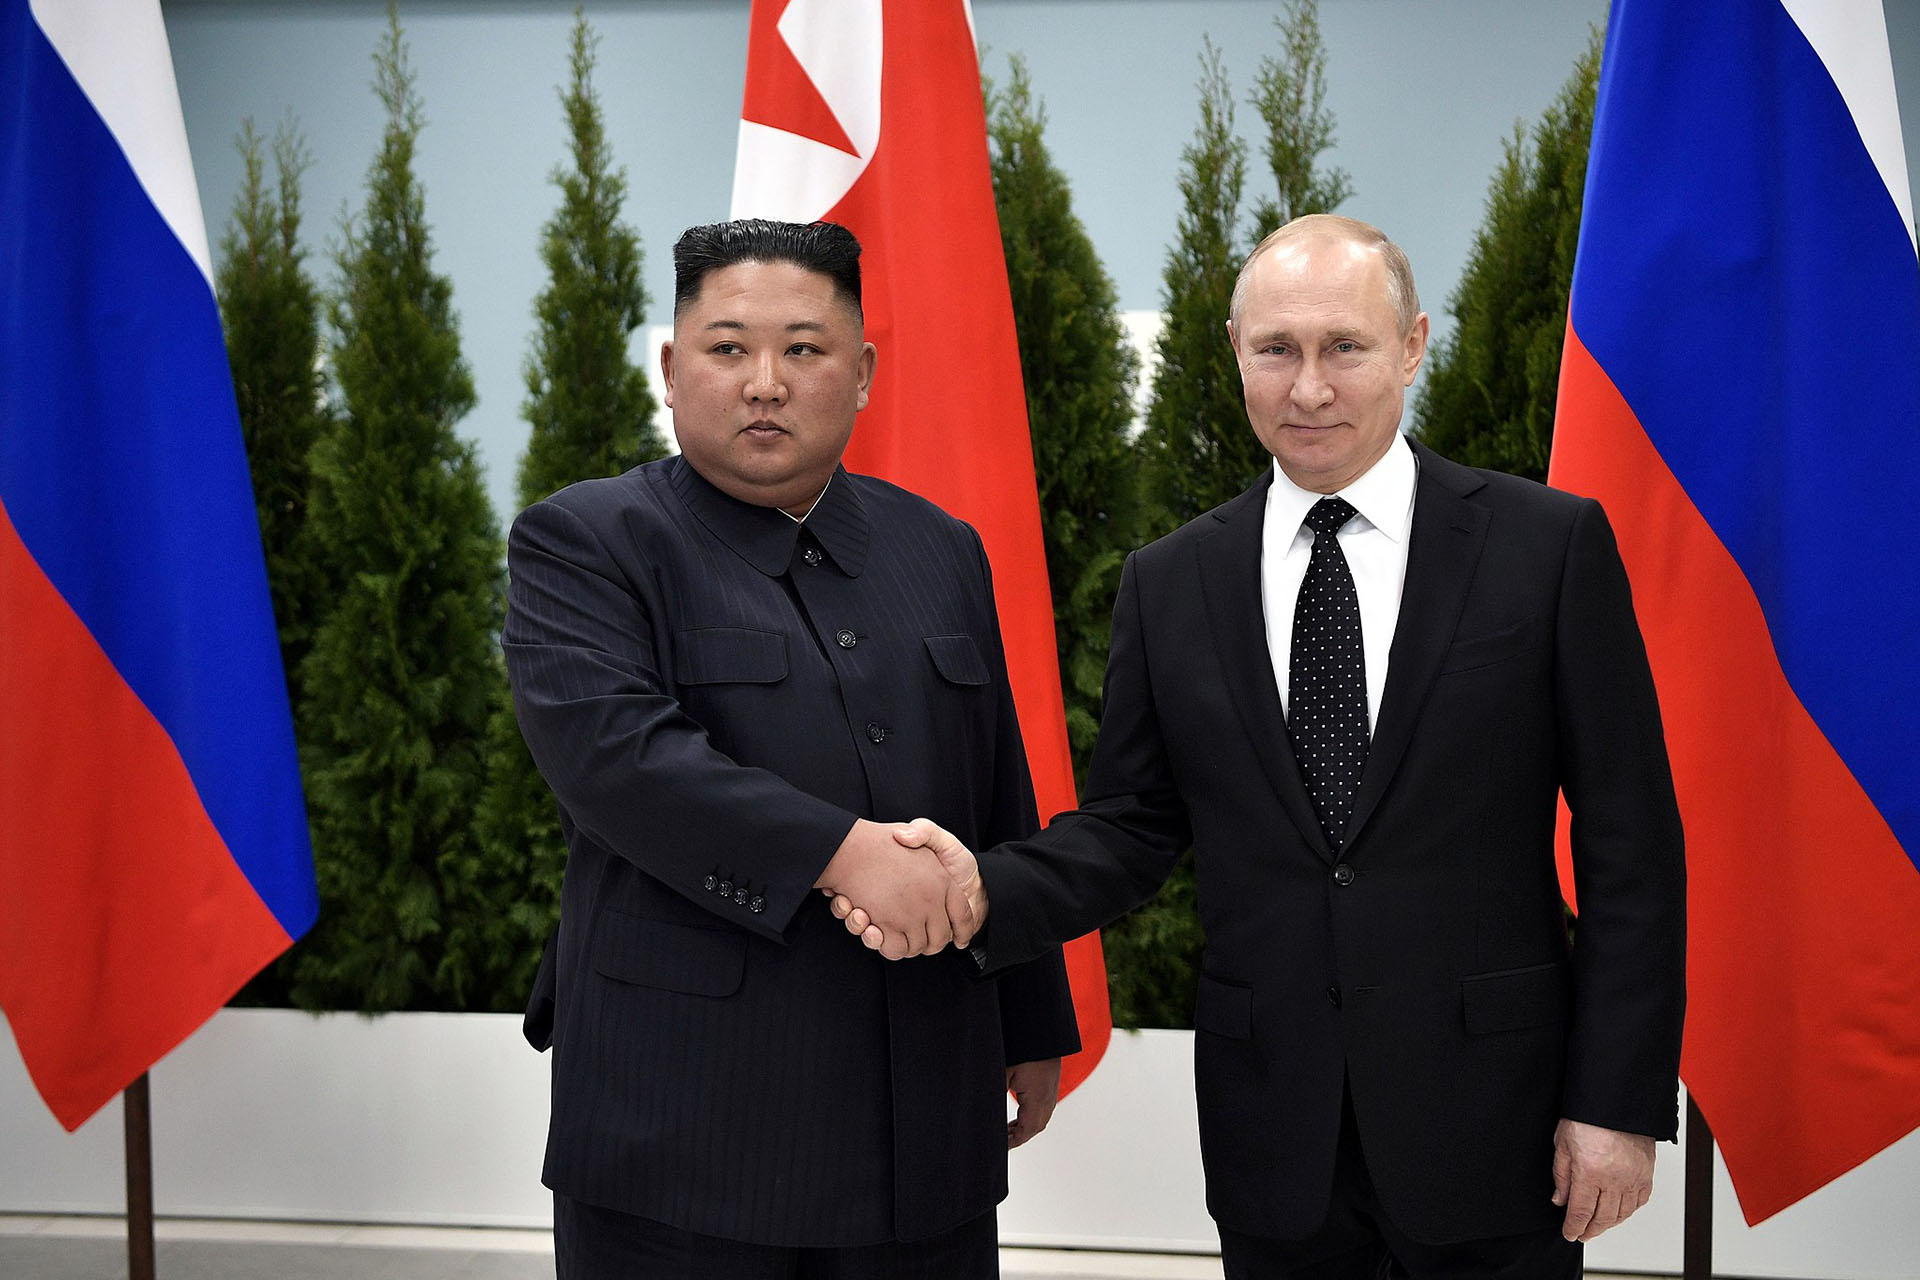 Bild: Kremlin.ru, Kim Jong-un and Vladimir Putin (2019-04-25) 01, CC BY 4.0, via Wikimedia Commons (Bildgröße geändert)